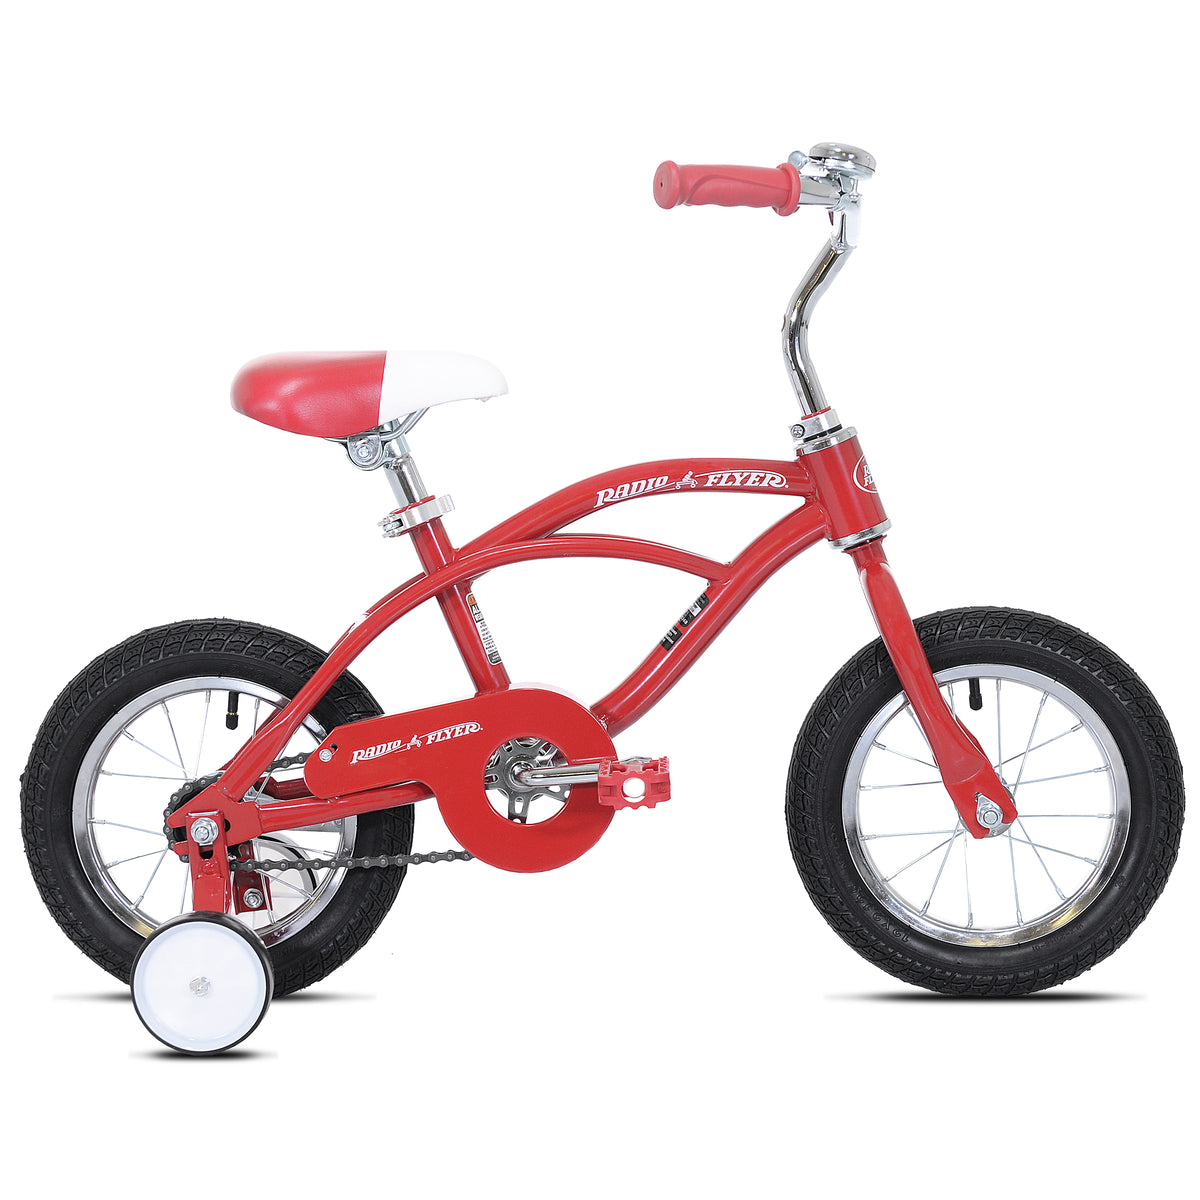 12" Radio Flyer | Cruiser Bike for Kids Ages 2-4